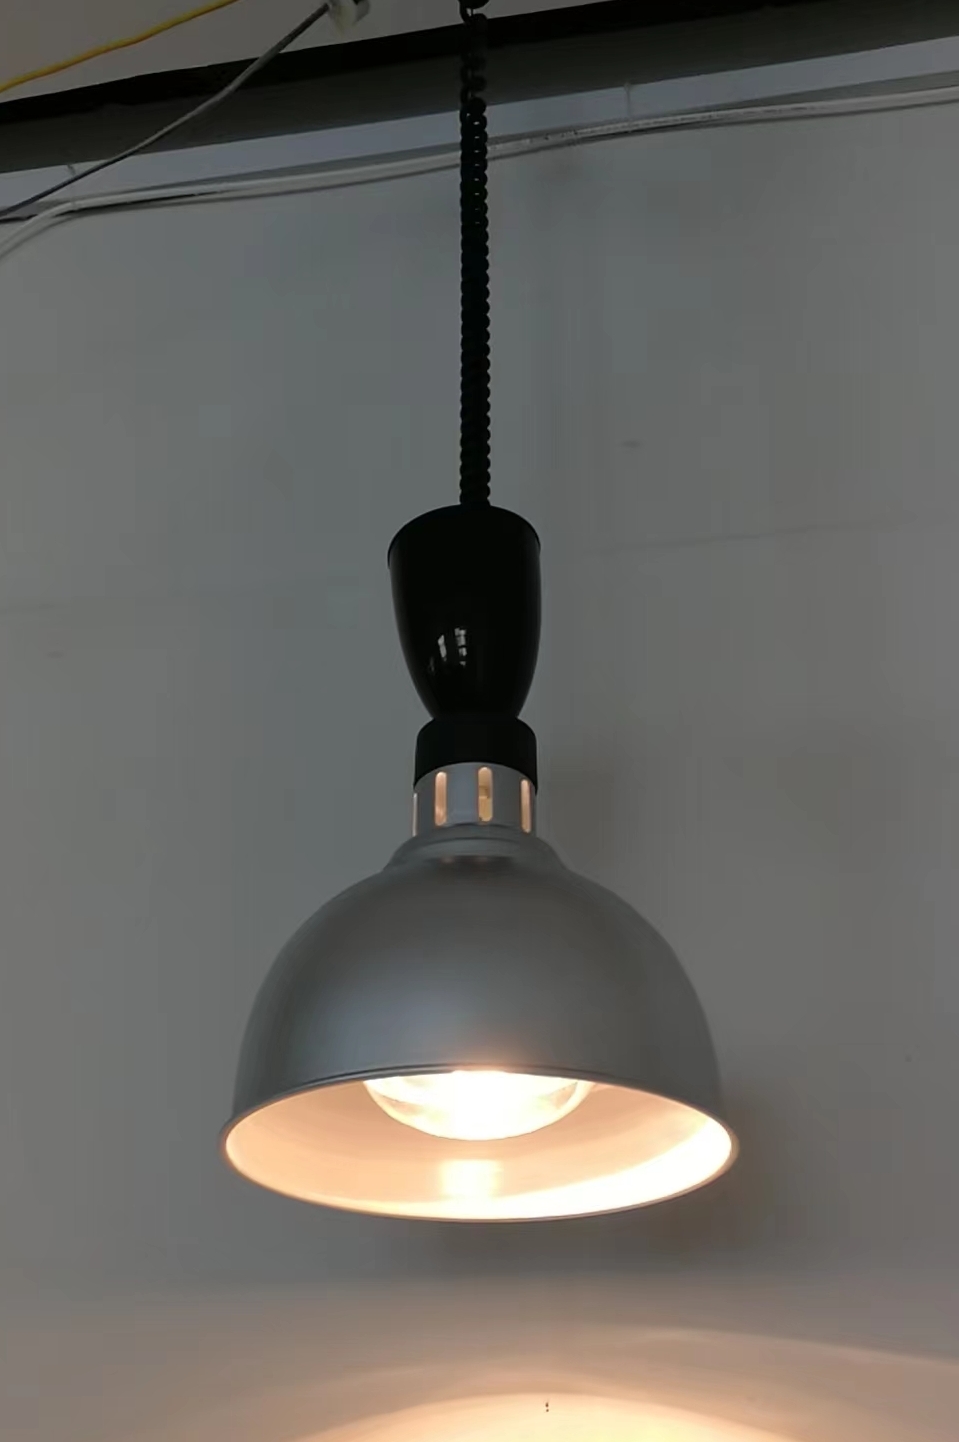 Heat Silver Metal Shade Chorme Reataurant Cafe Indoor Pendant Light (KIA-92P)